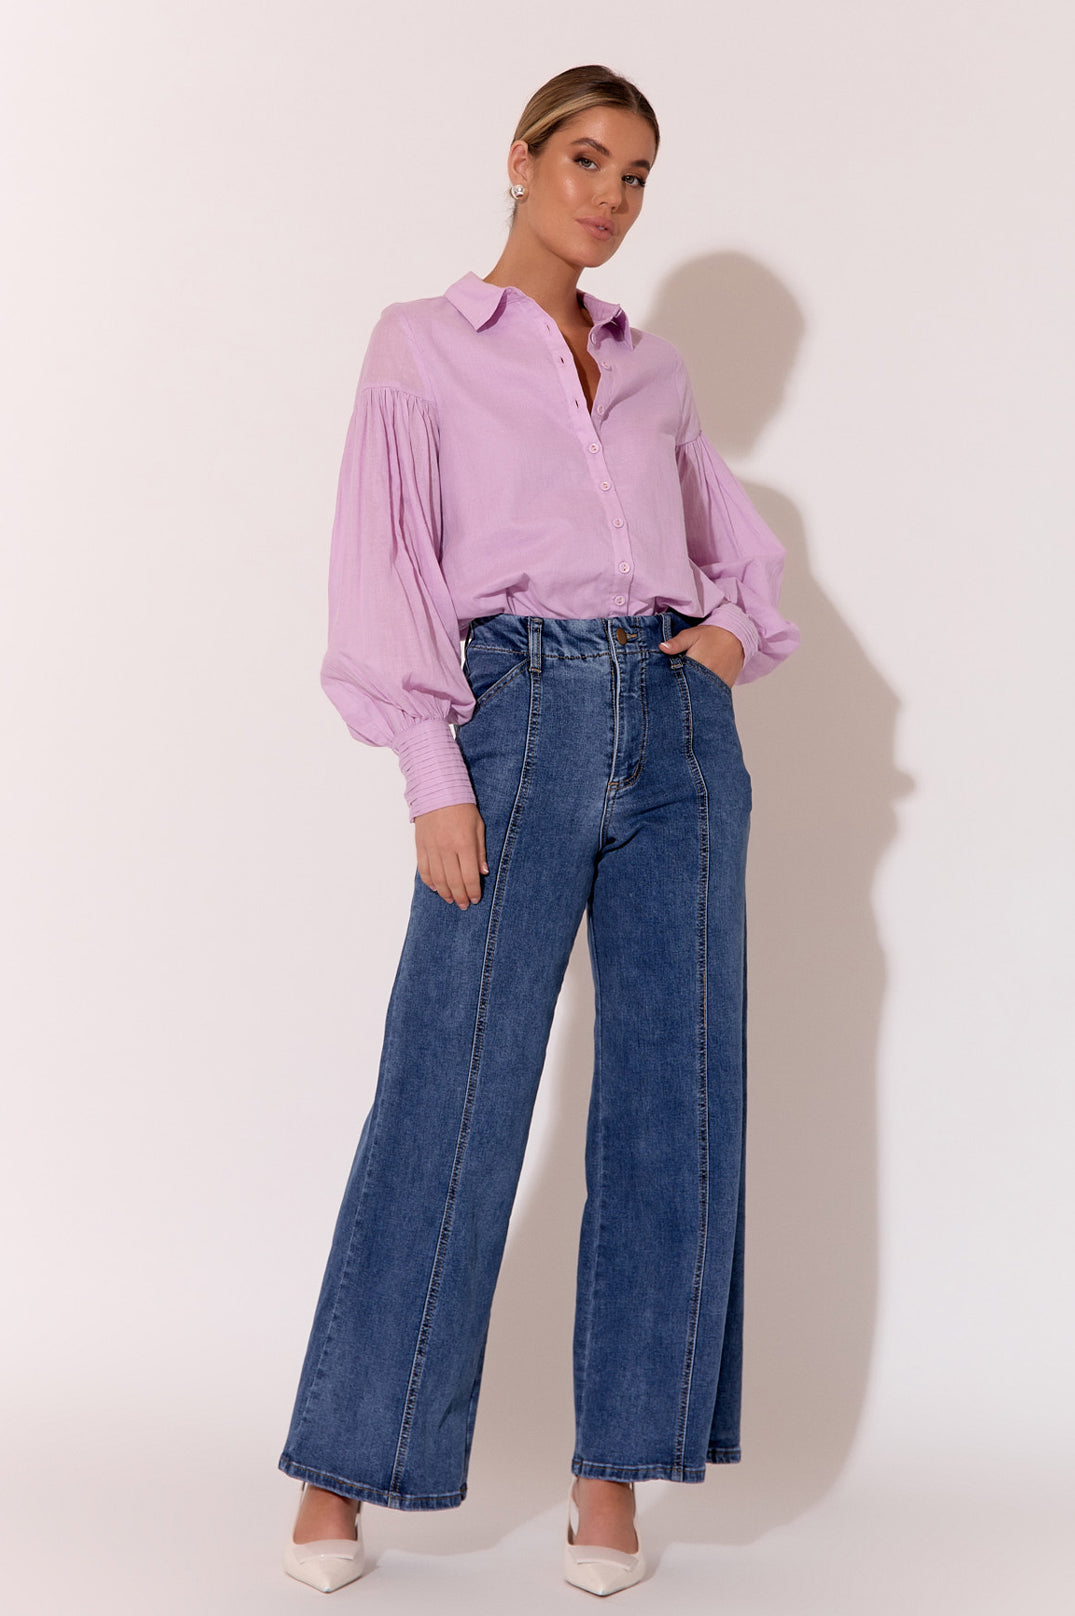 Adorne Ebony Pintuck Detail Shirt - Lilac